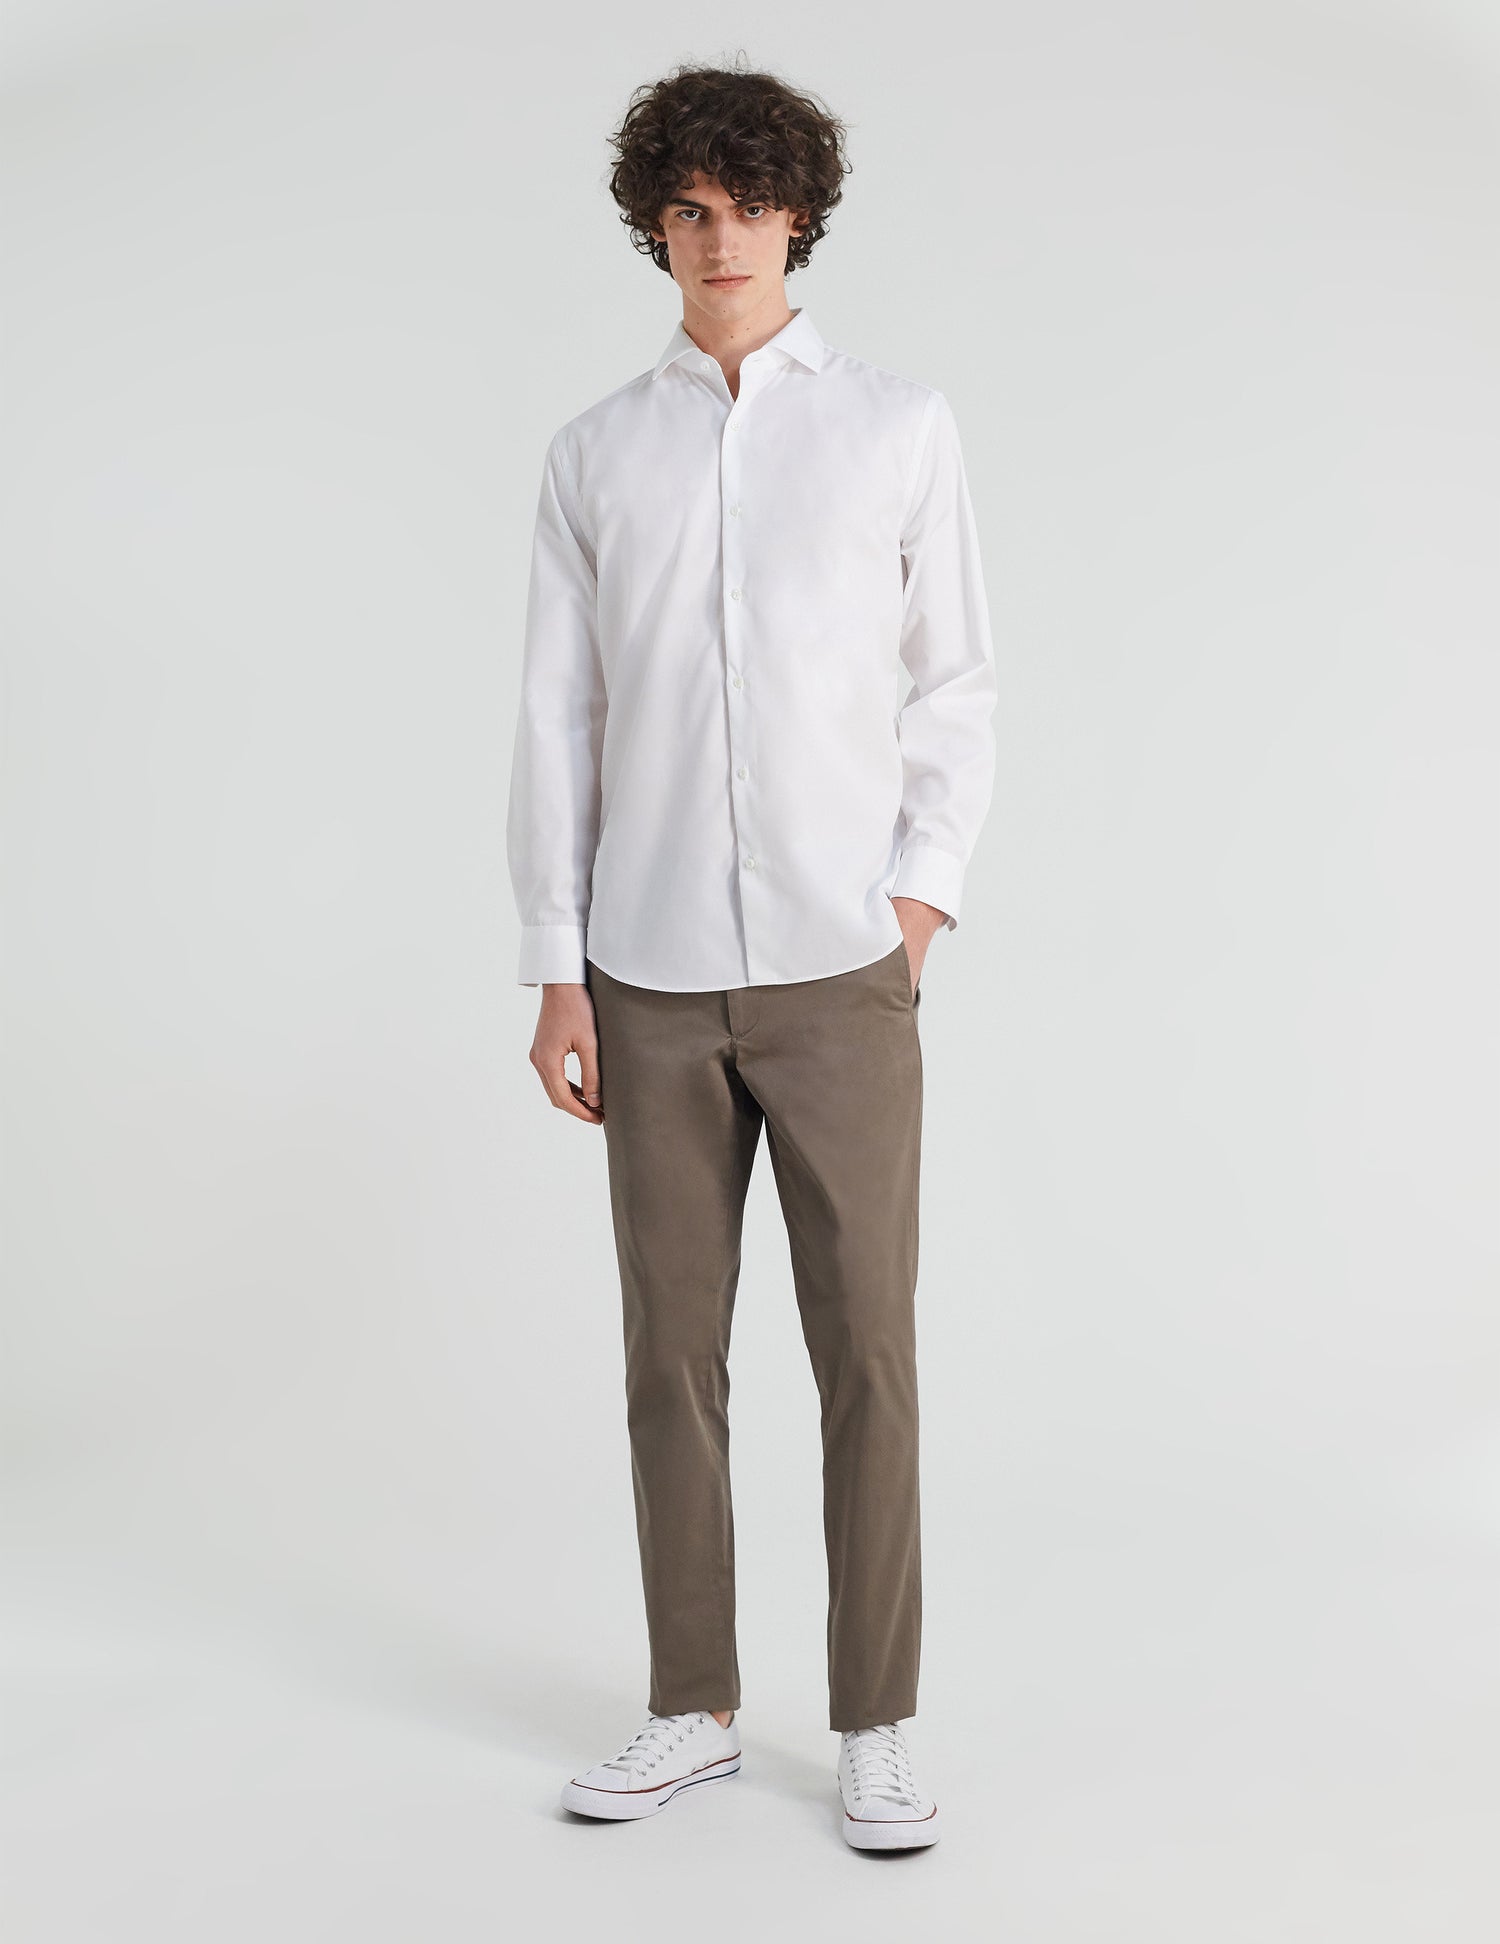 Classic white wrinkle-free shirt - Poplin - Italian Collar#4